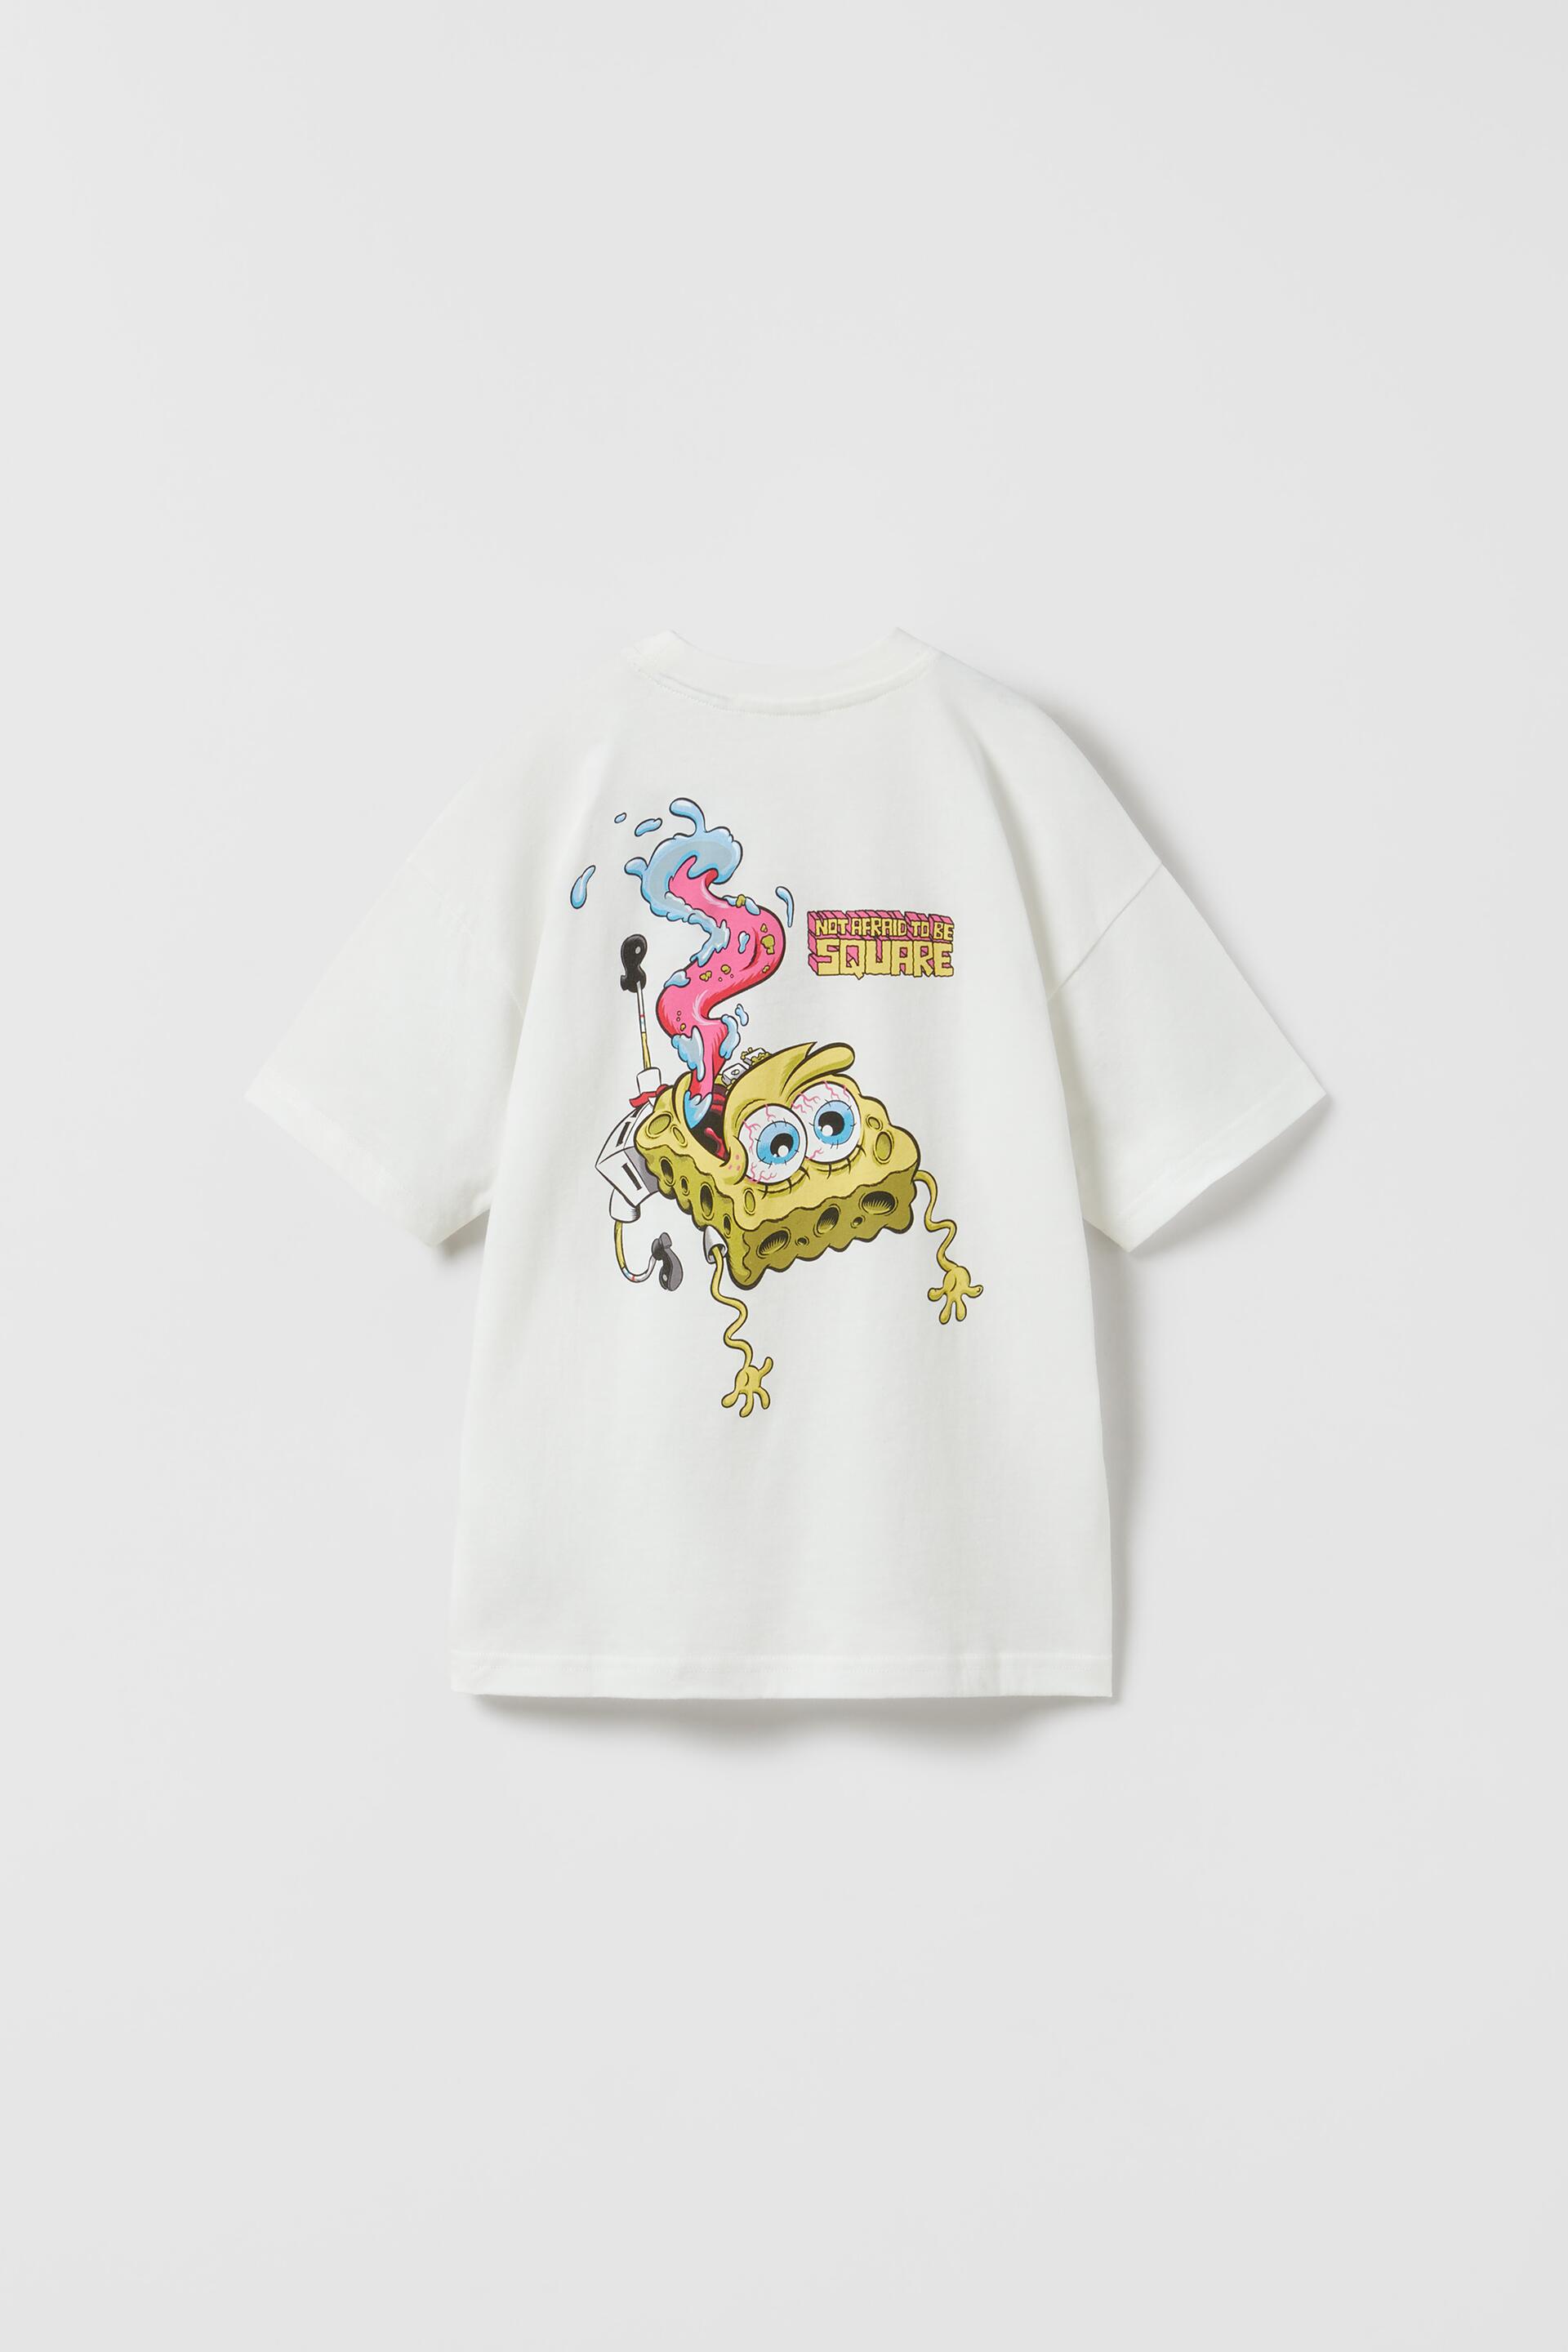 Zara Spongebob Squarepants © Nickelodeon T-Shirt - Big Apple Buddy